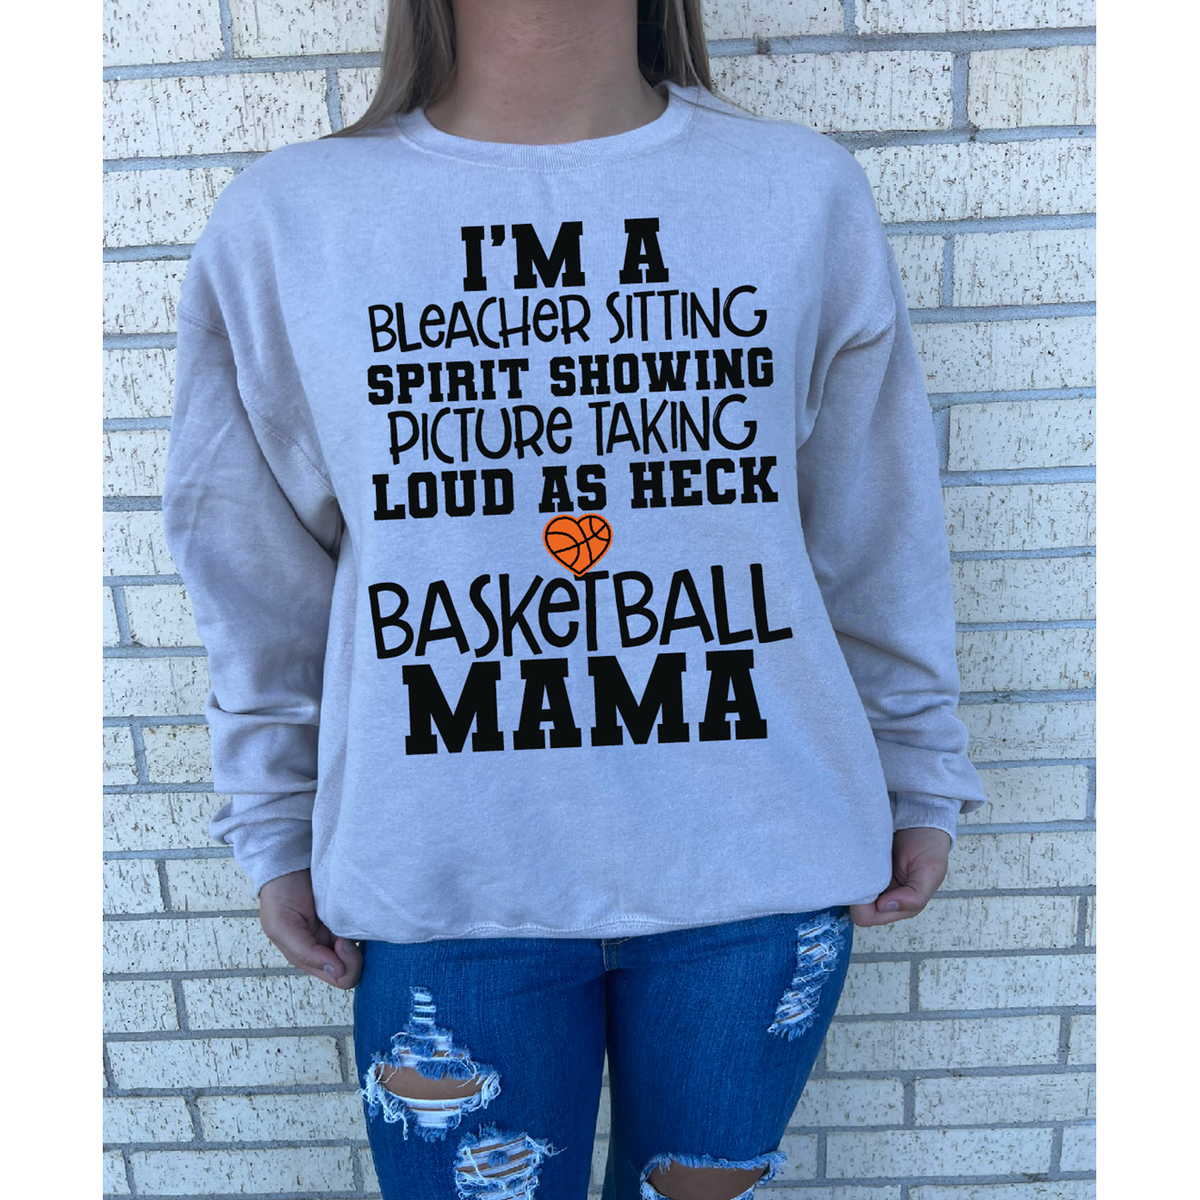 Loud as Heck Basketball Mama Tee or Sweatshirt